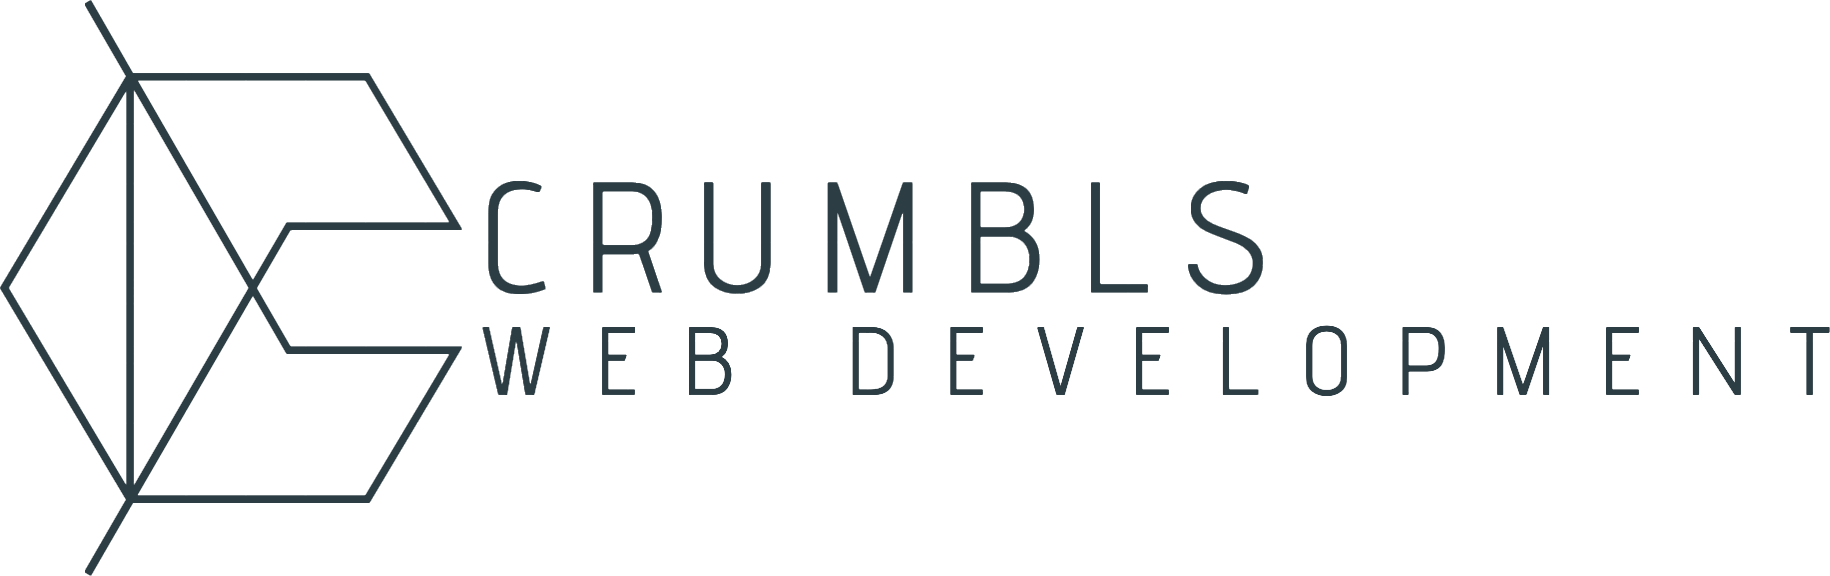 Our Logo - Crumbls, LLC